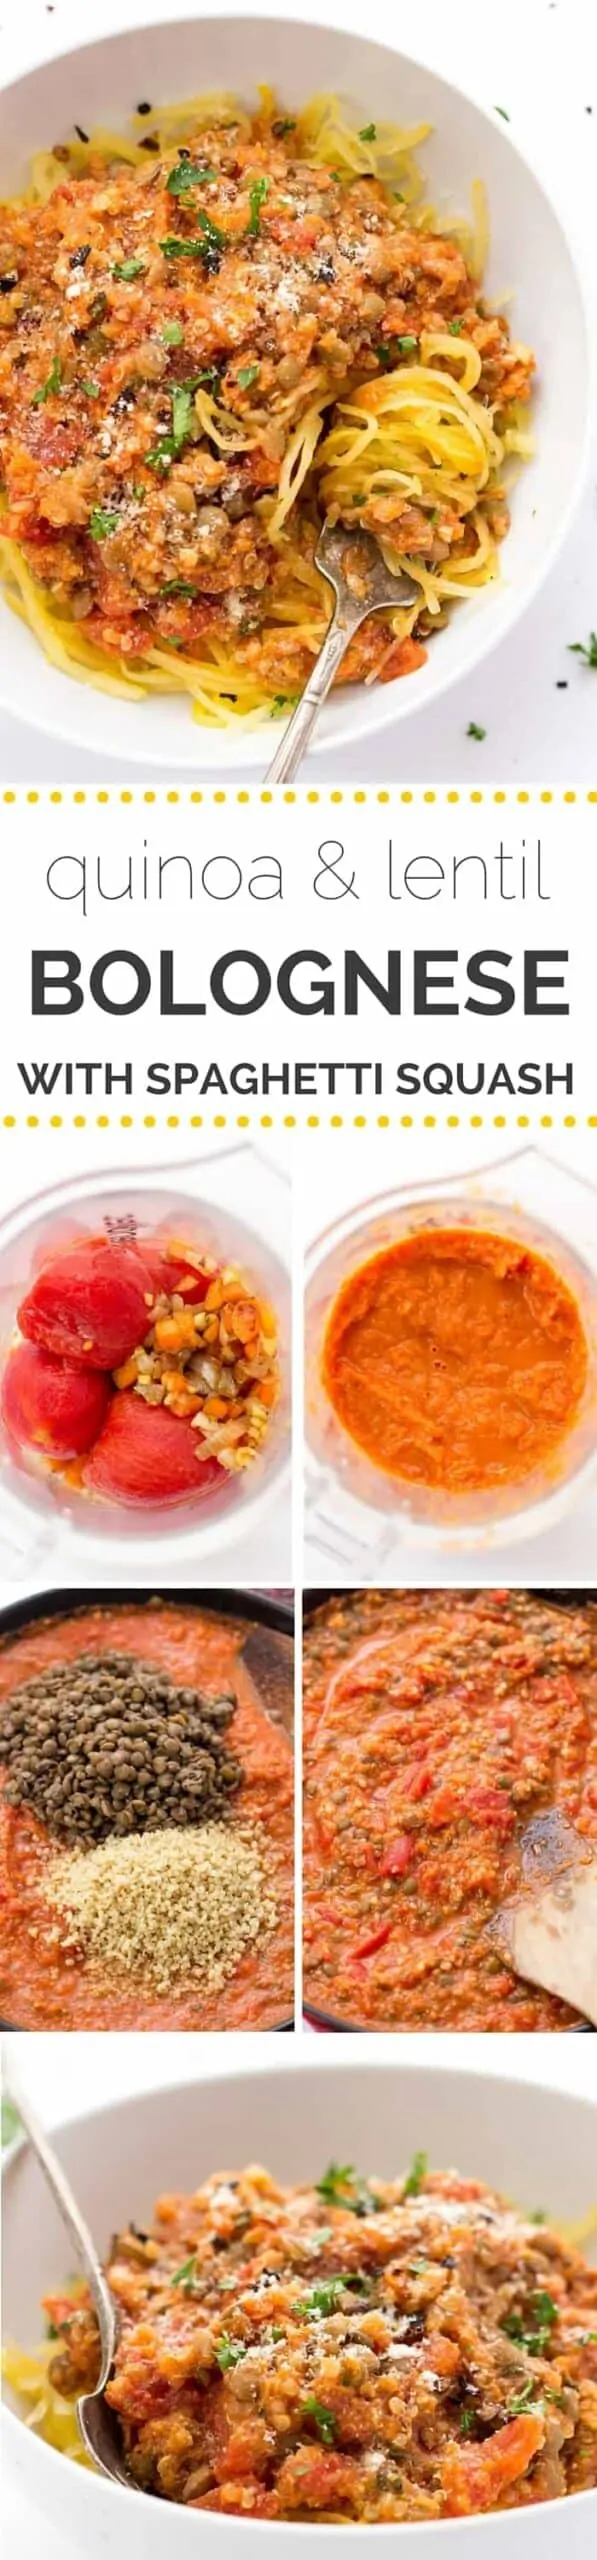 Pinterest title image for Spaghetti Squash Bolognese.